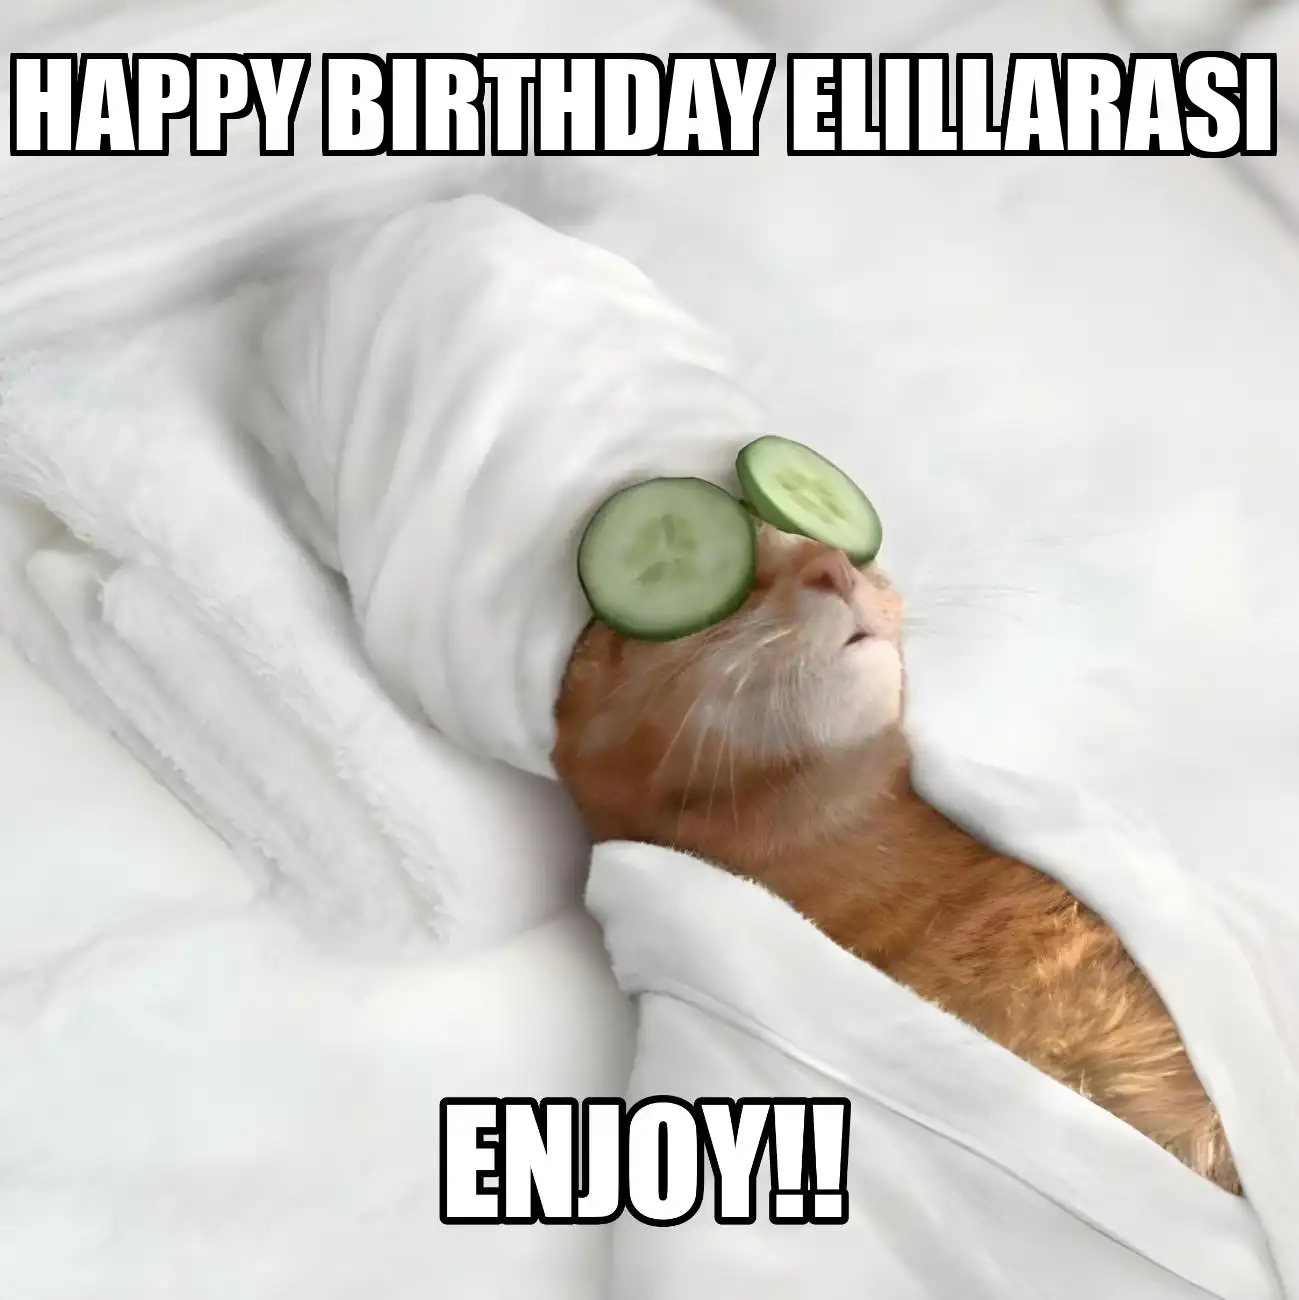 Happy Birthday Elillarasi Enjoy Cat Meme